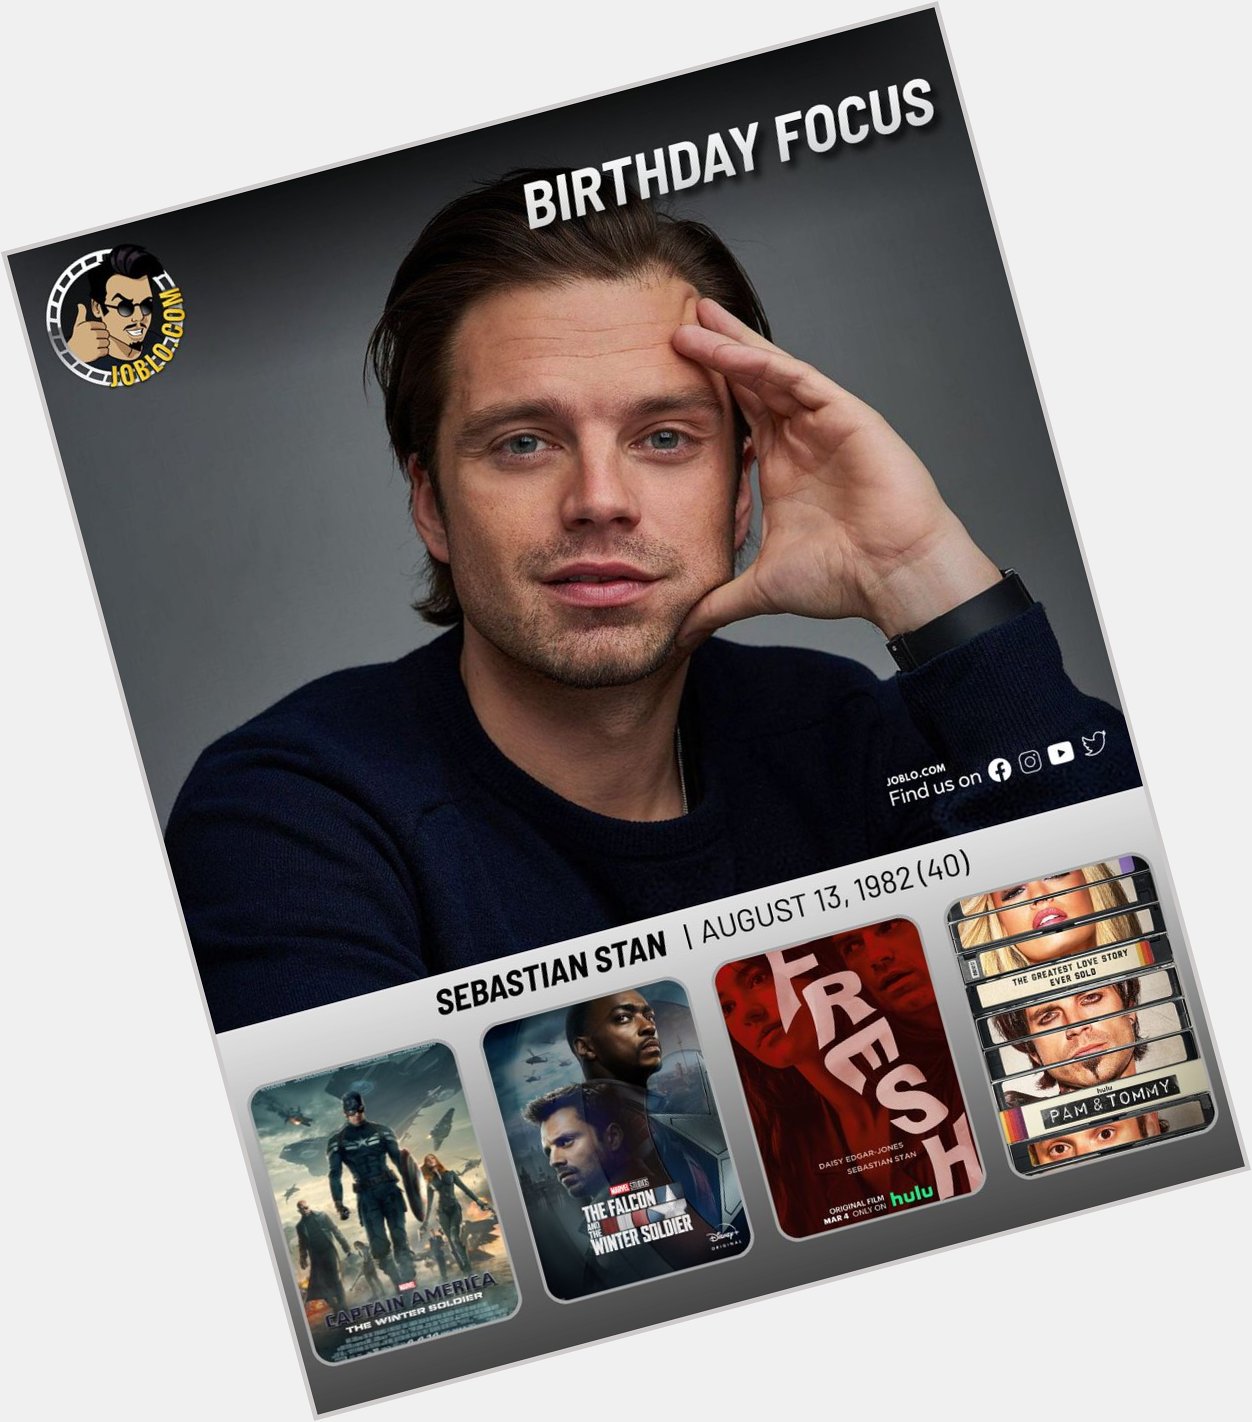 Happy birthday Sebastian Stan!  